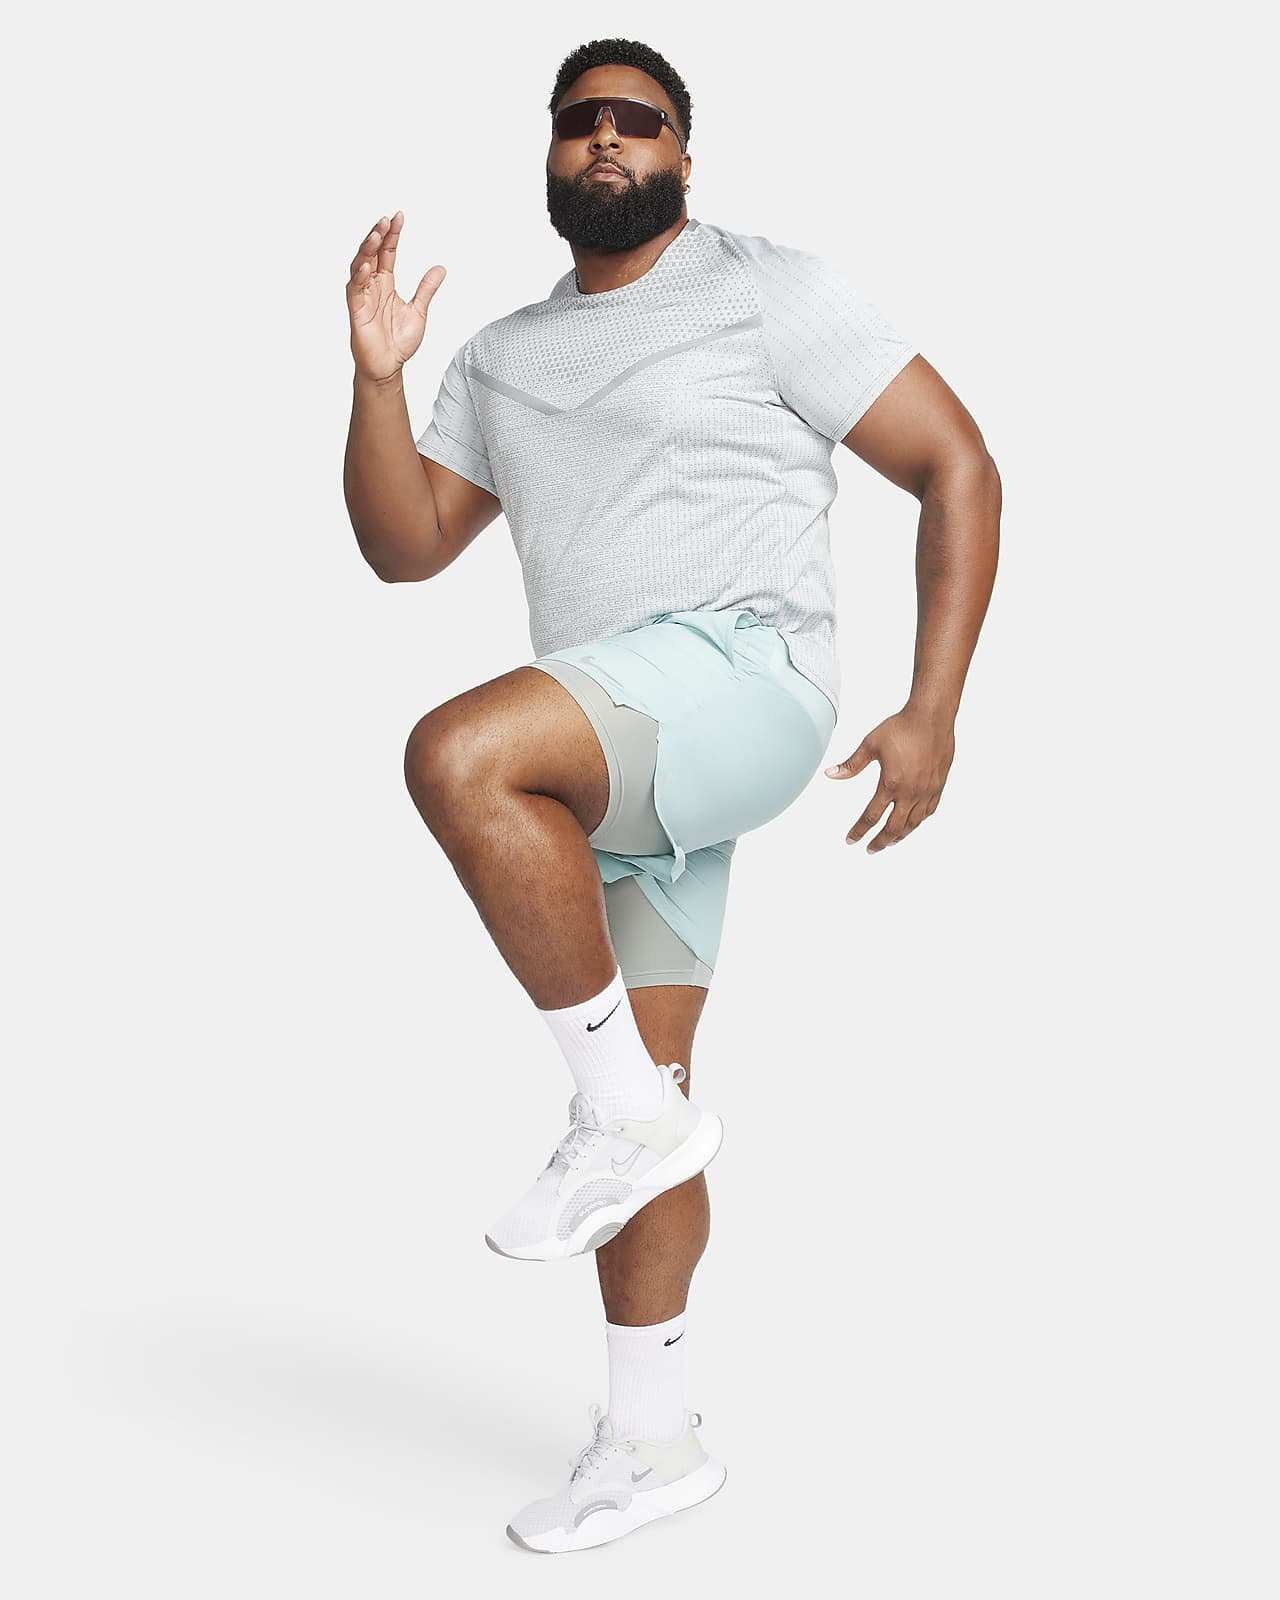 Nike Men's Dri-FIT ADV Techknit Ultra Long Sleeve